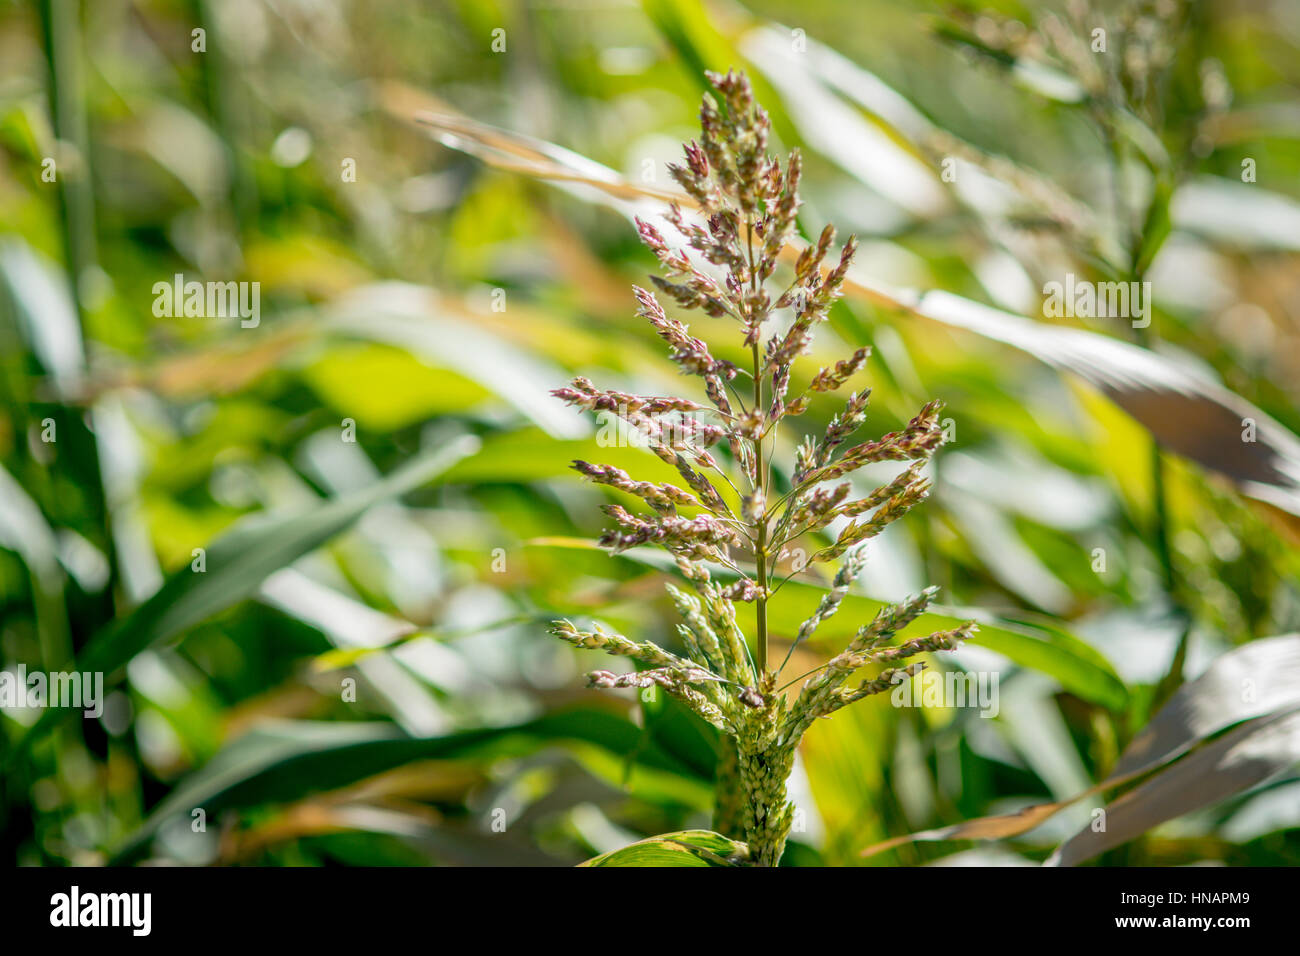 Sudan grass/sorgham cross Cover crop variety trials at Washington State  University Organic Farm in Pullman Washington Stock Photo